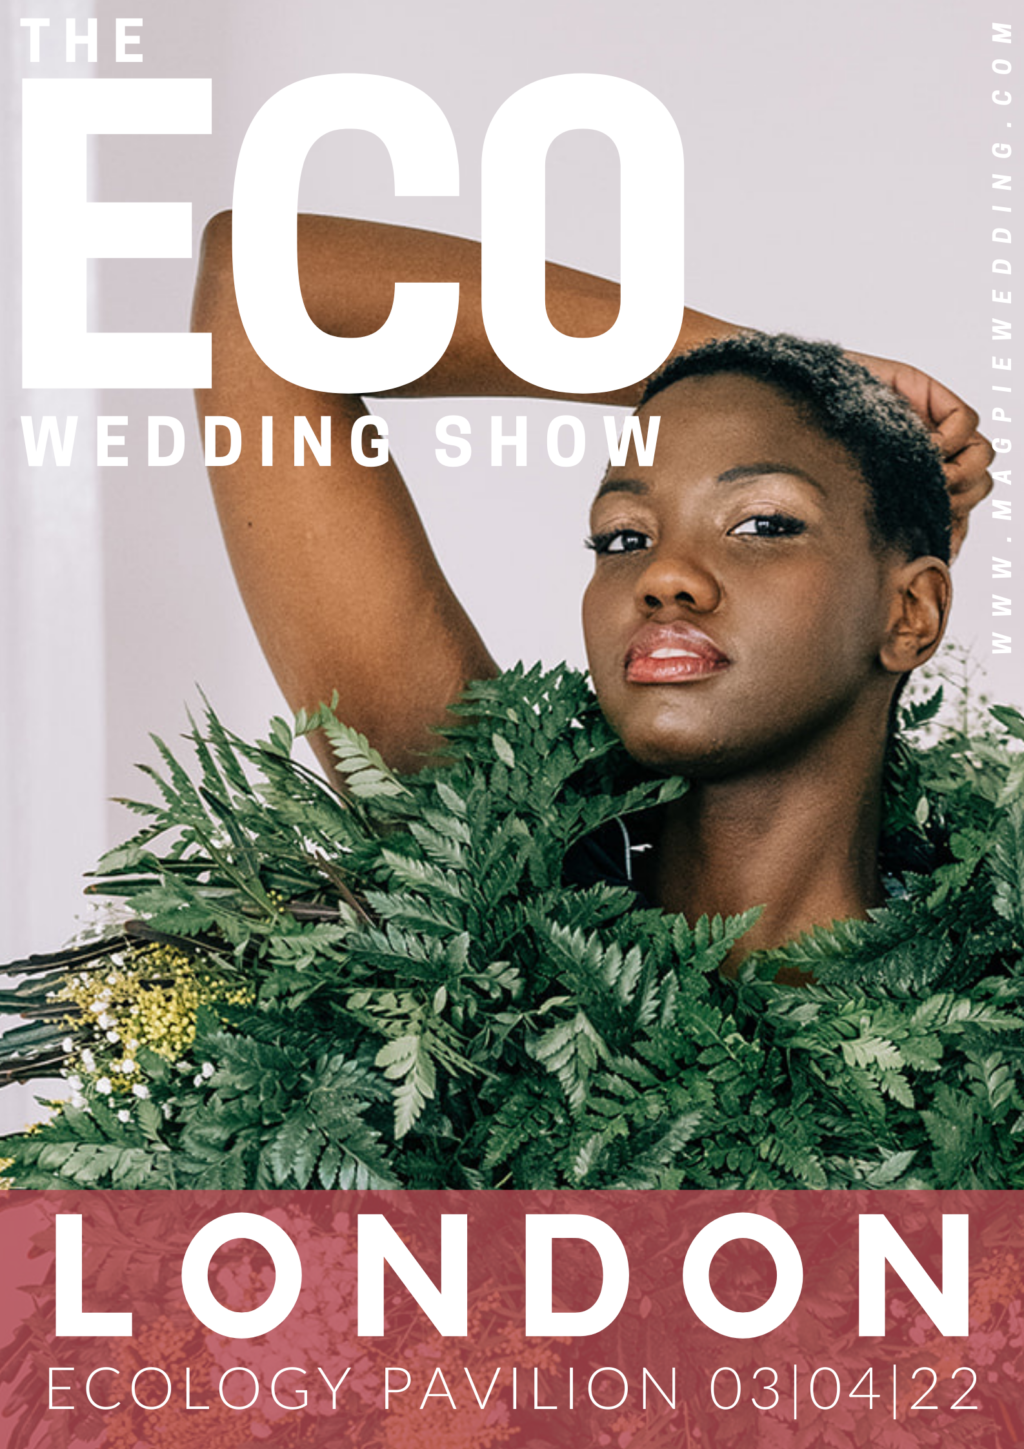 London ECO Wedding Show Poster